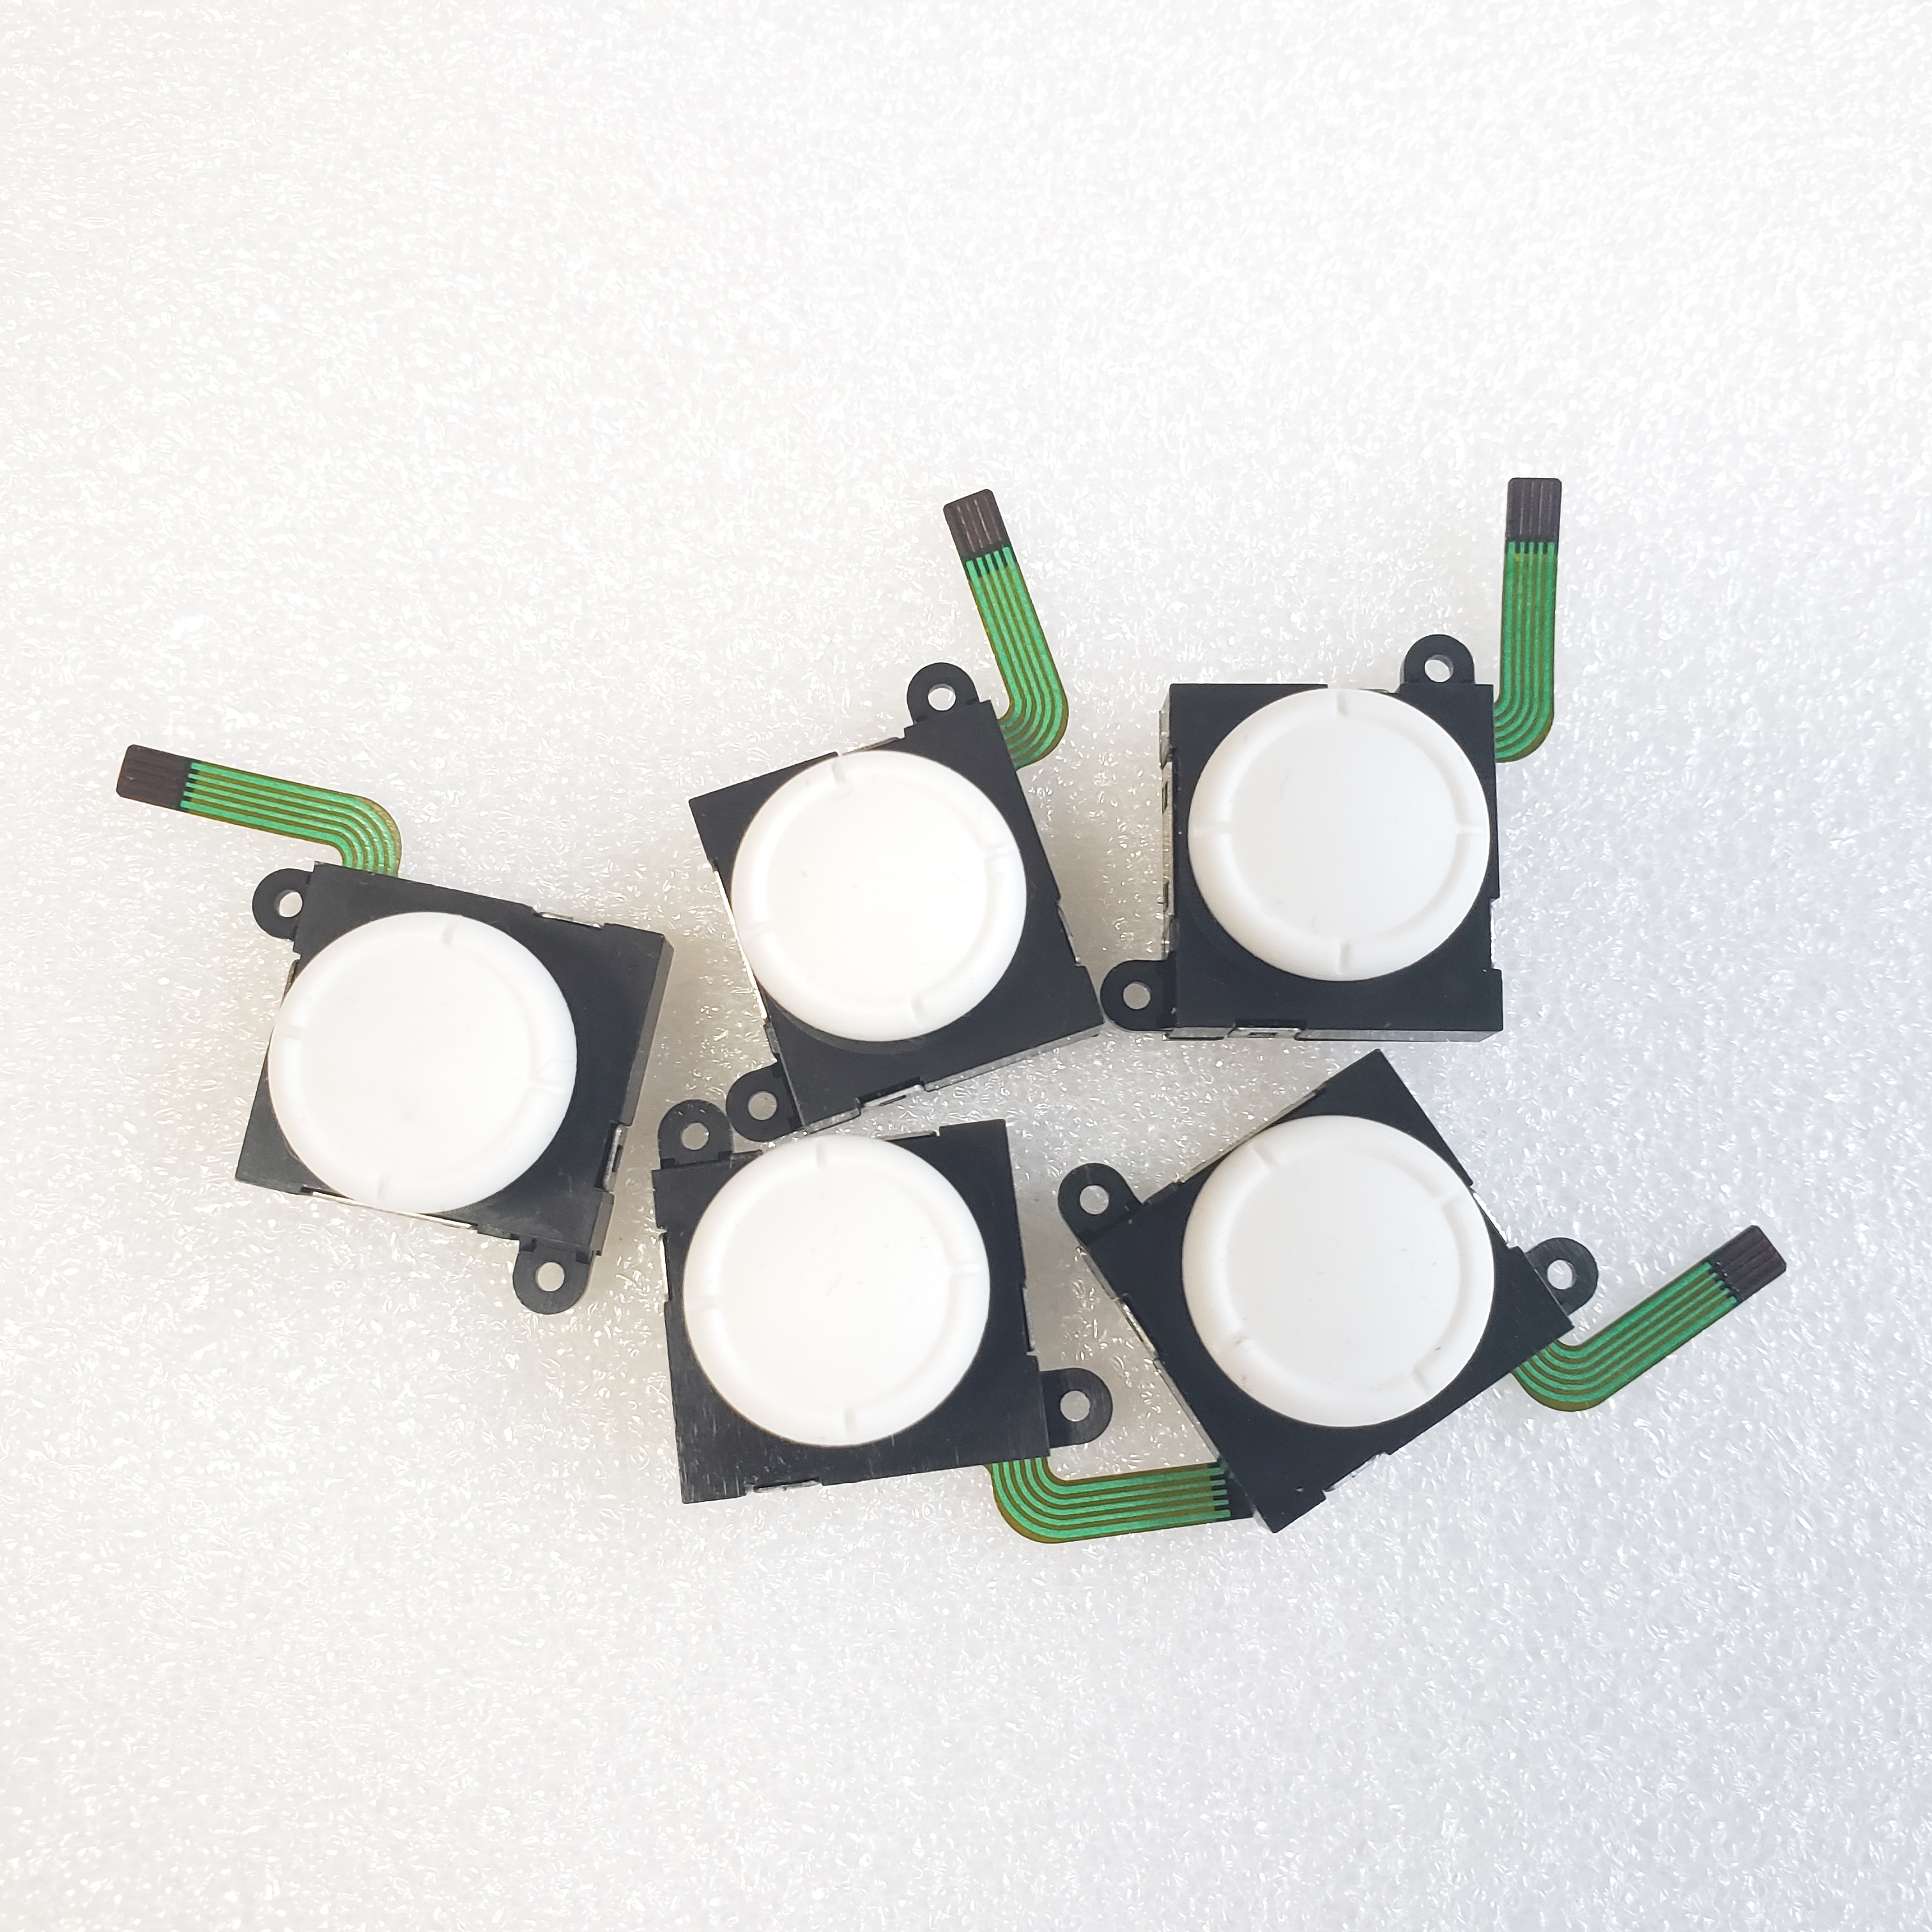 3d vita analoga joystick tumspak grepplock sensormodul kontrollvippa för nintend switch lite joy-con kontrollerknapp